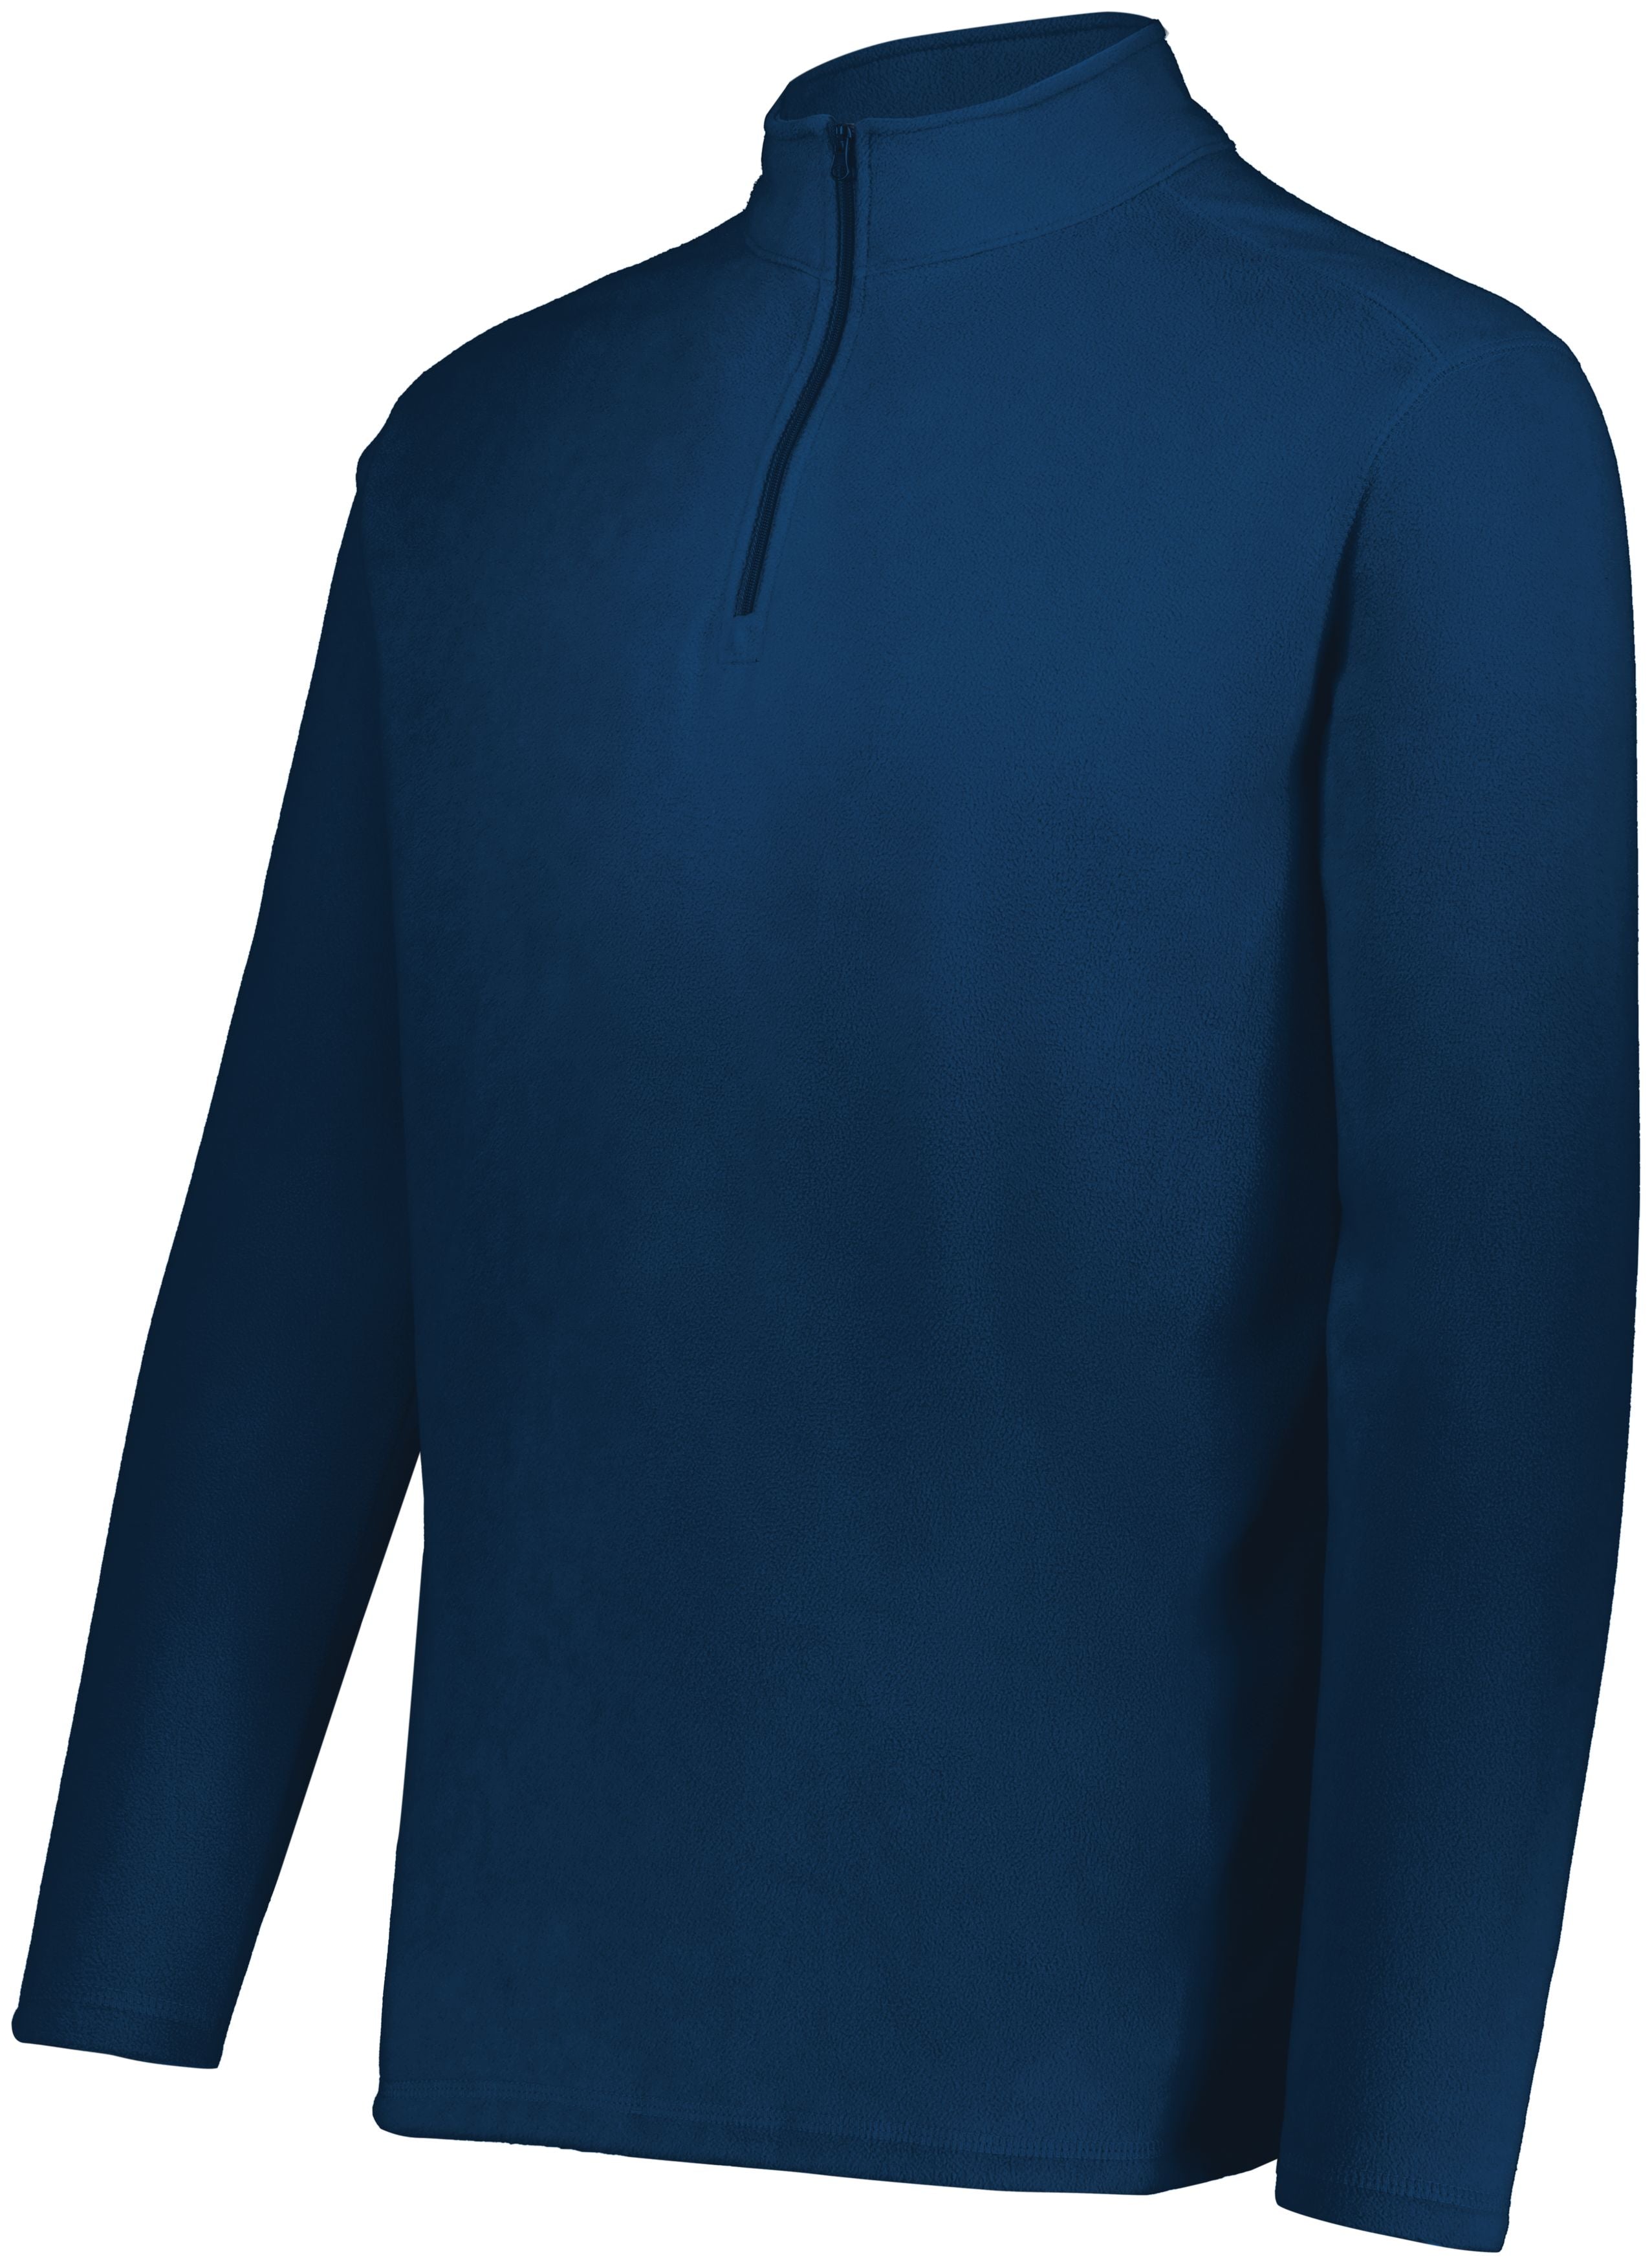 C3) 6863 Augusta Sportswear Micro-Lite Fleece 1/4 Zip Pullover - BLADECORE